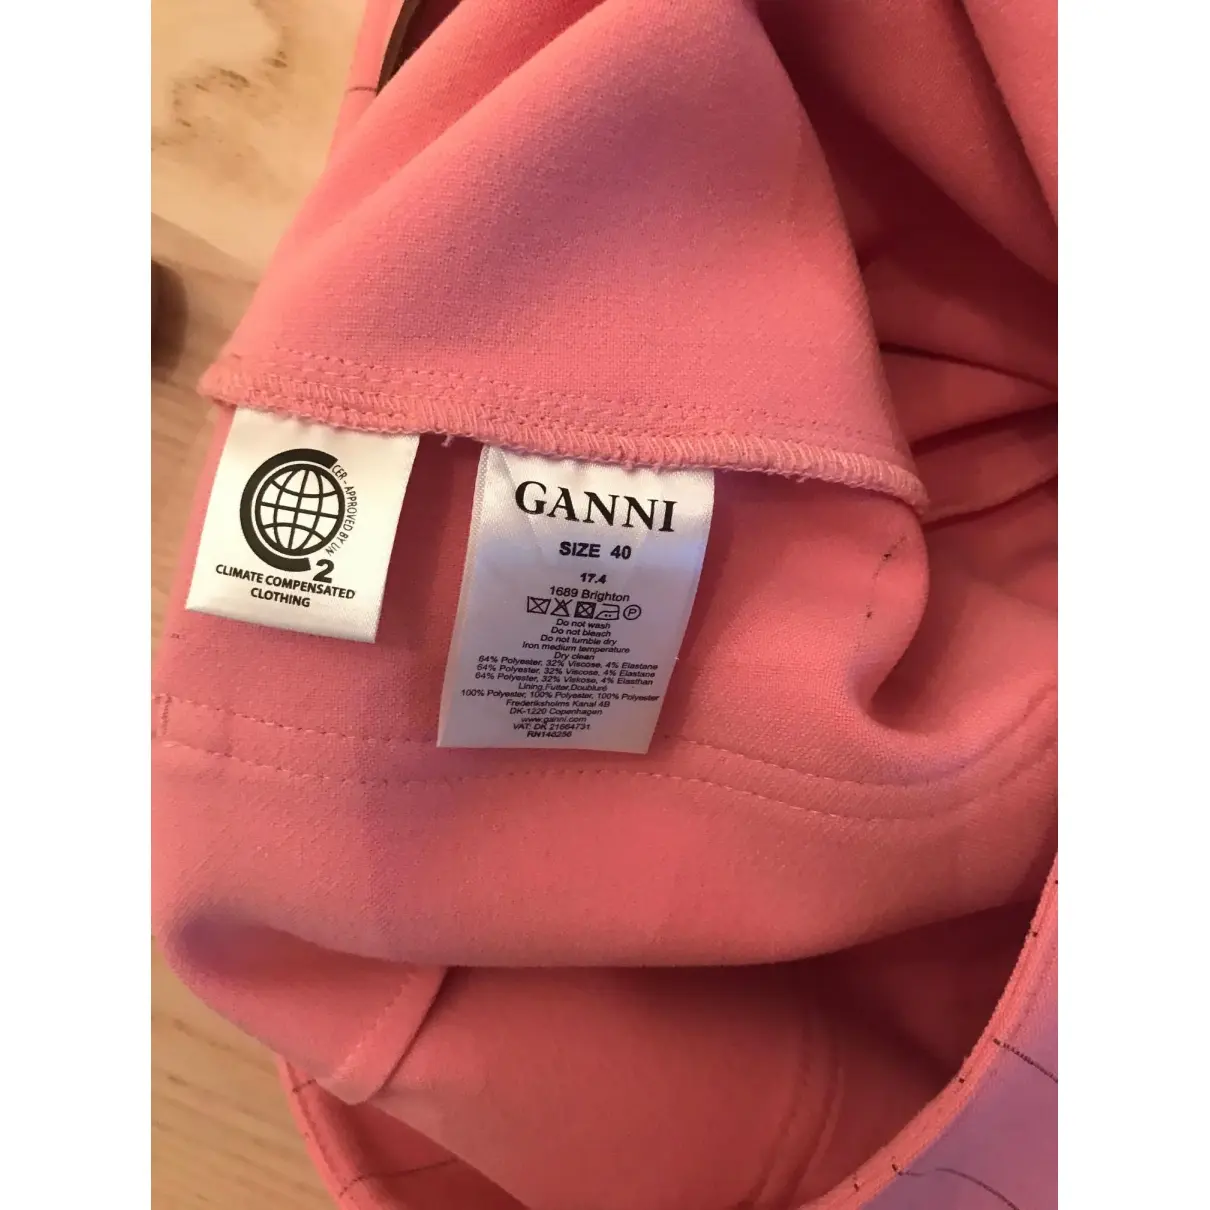 Buy Ganni Spring Summer 2019 trousers online